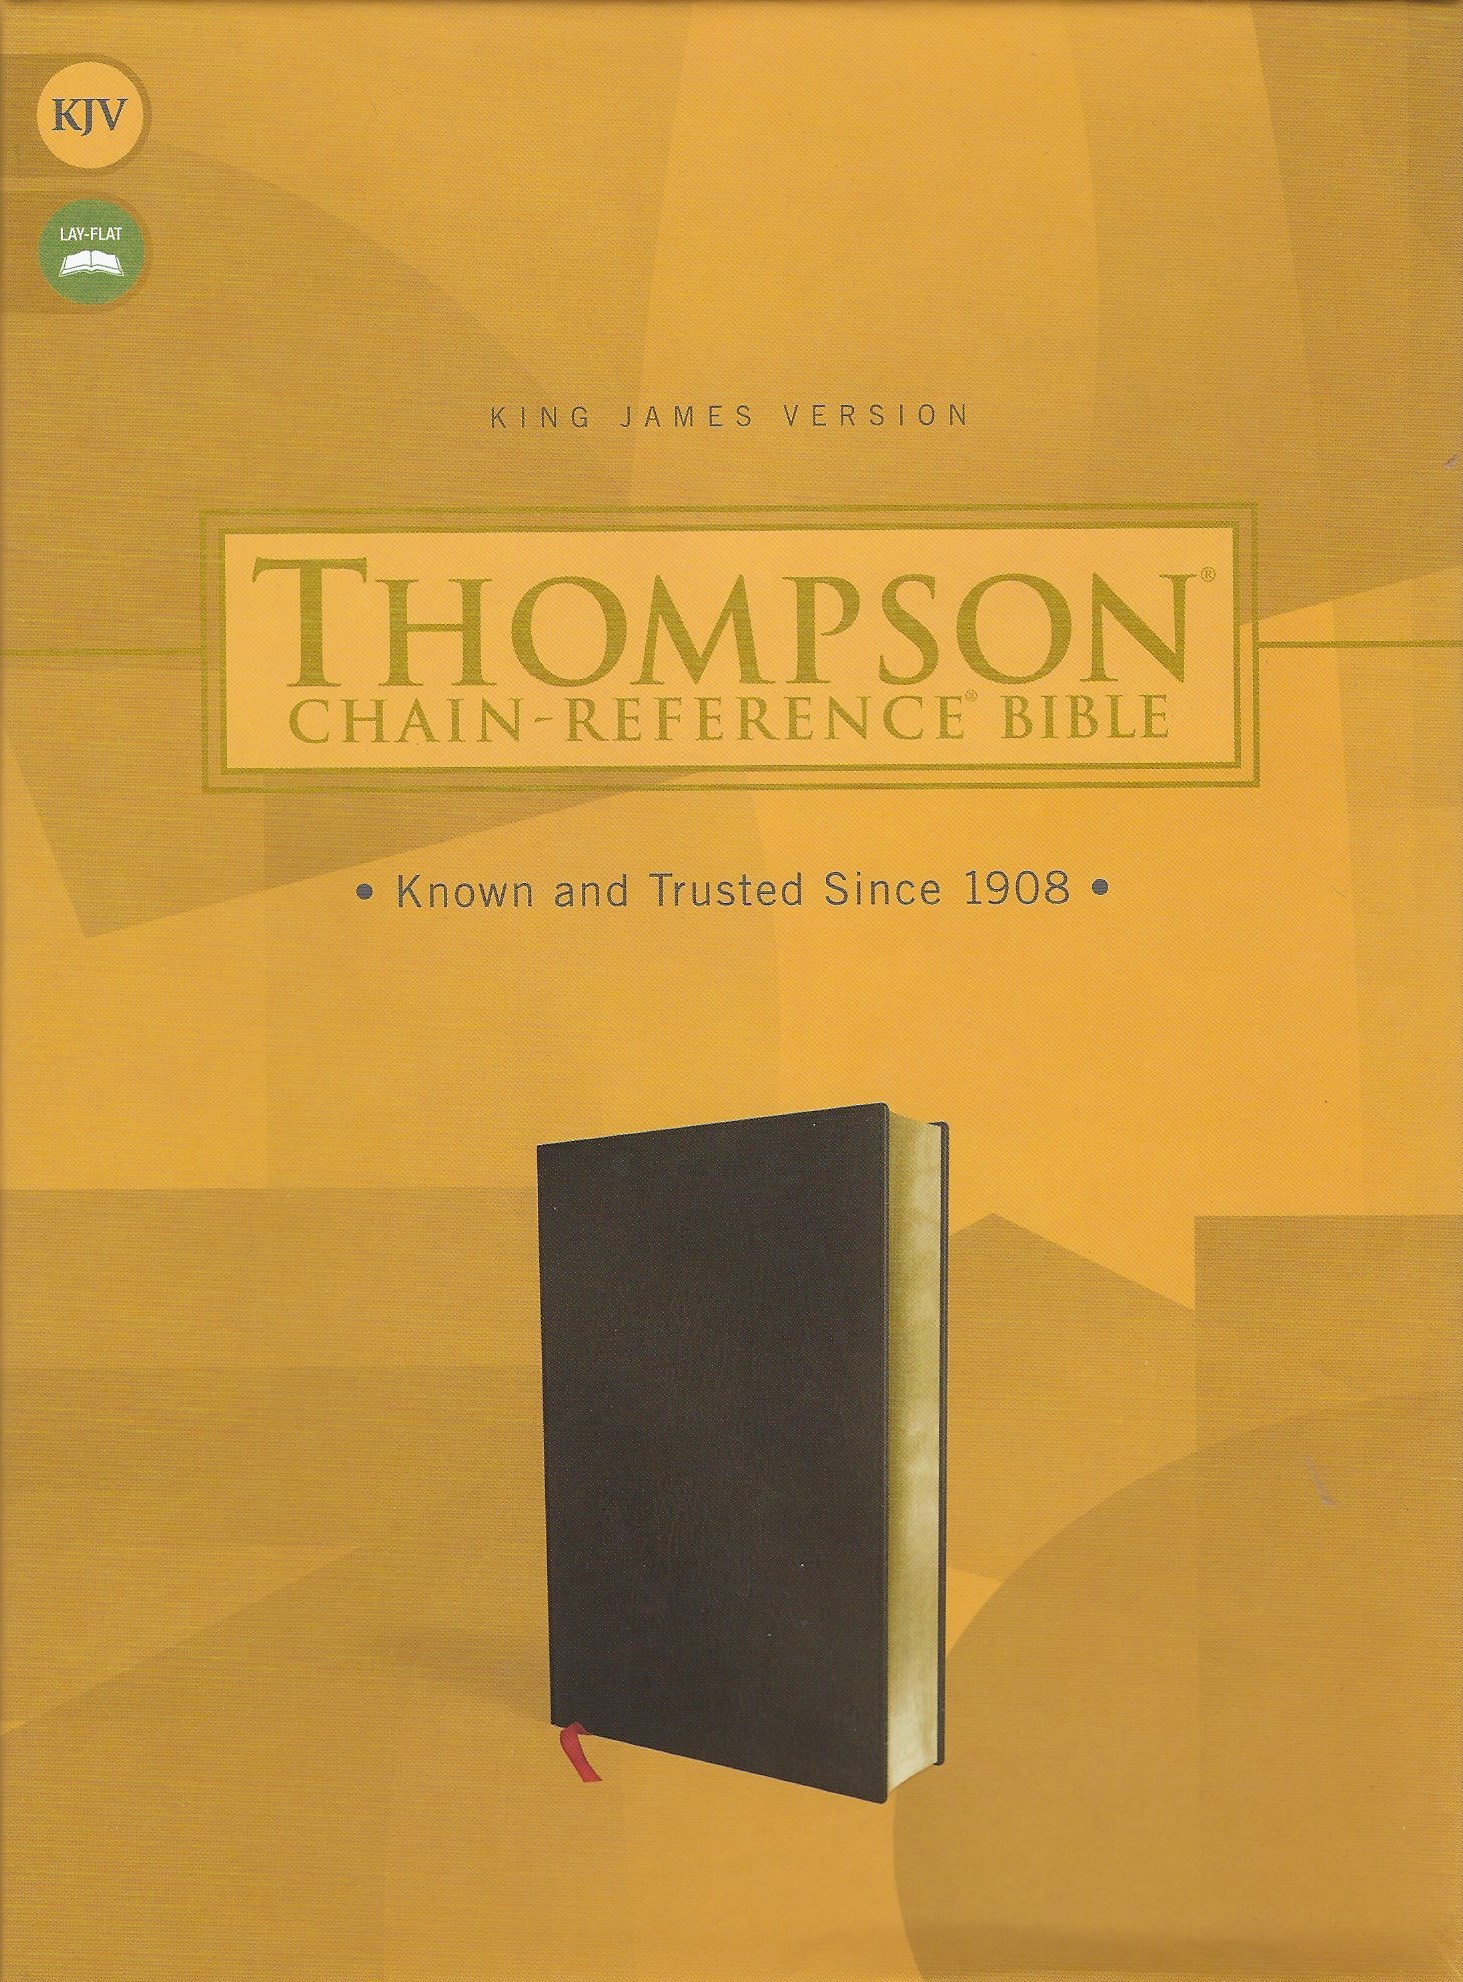 KJV THOMPSON CHAIN REFERENCE BIBLE Black bonded leather